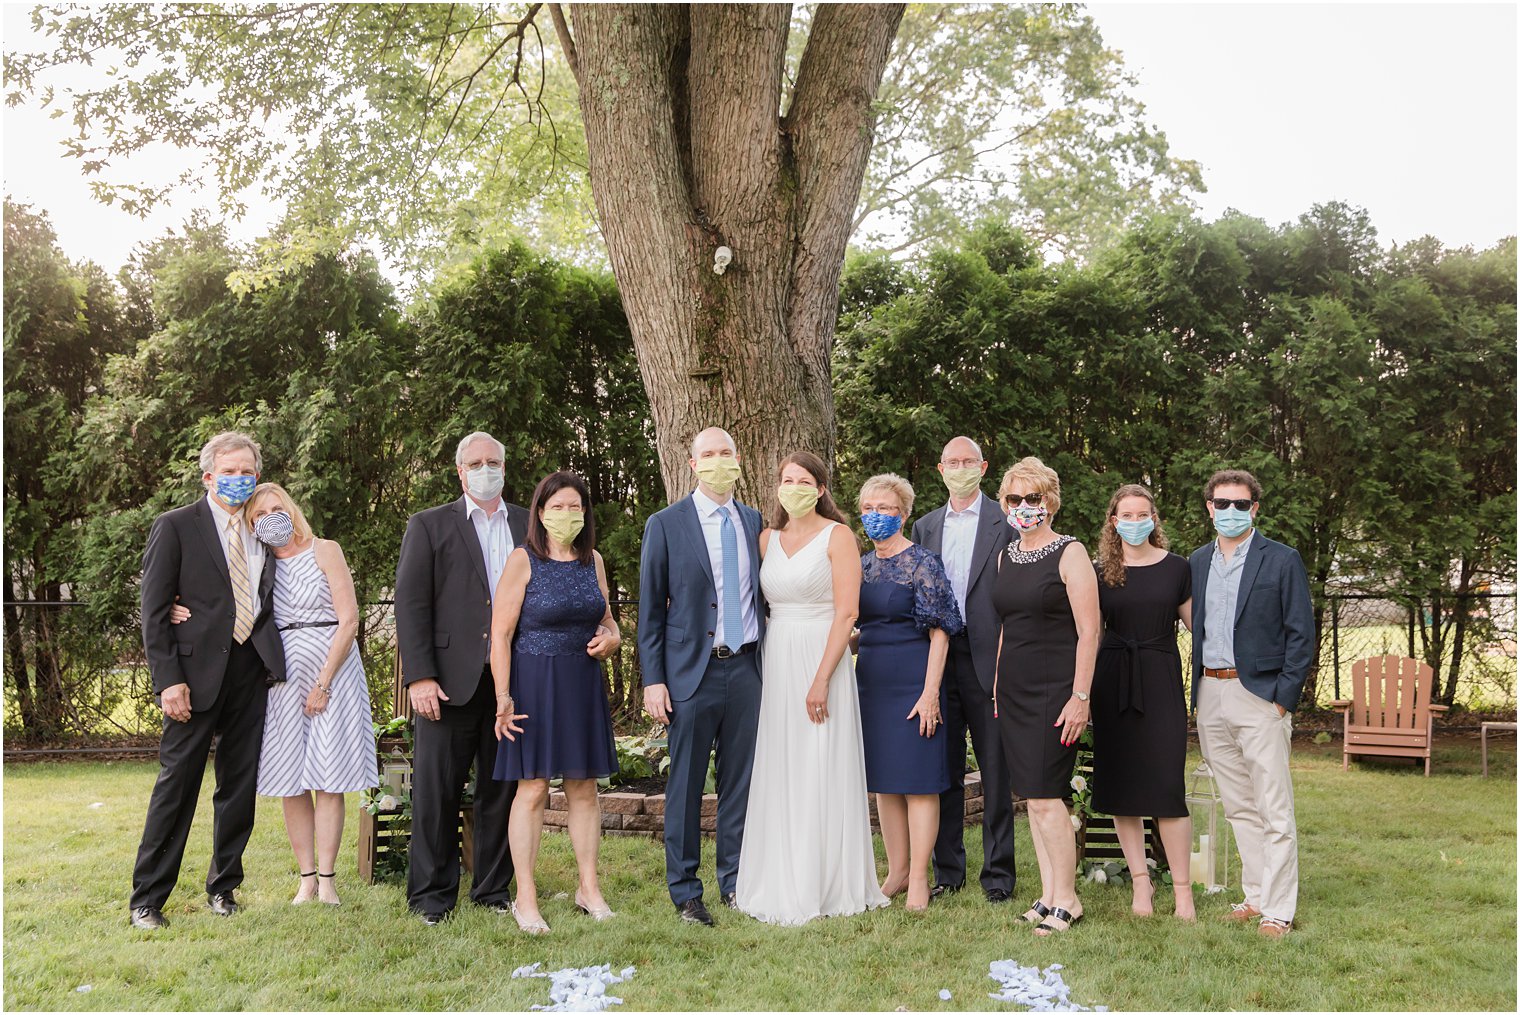 COVID-19 family portrait | NJ backyard wedding by Idalia Photography